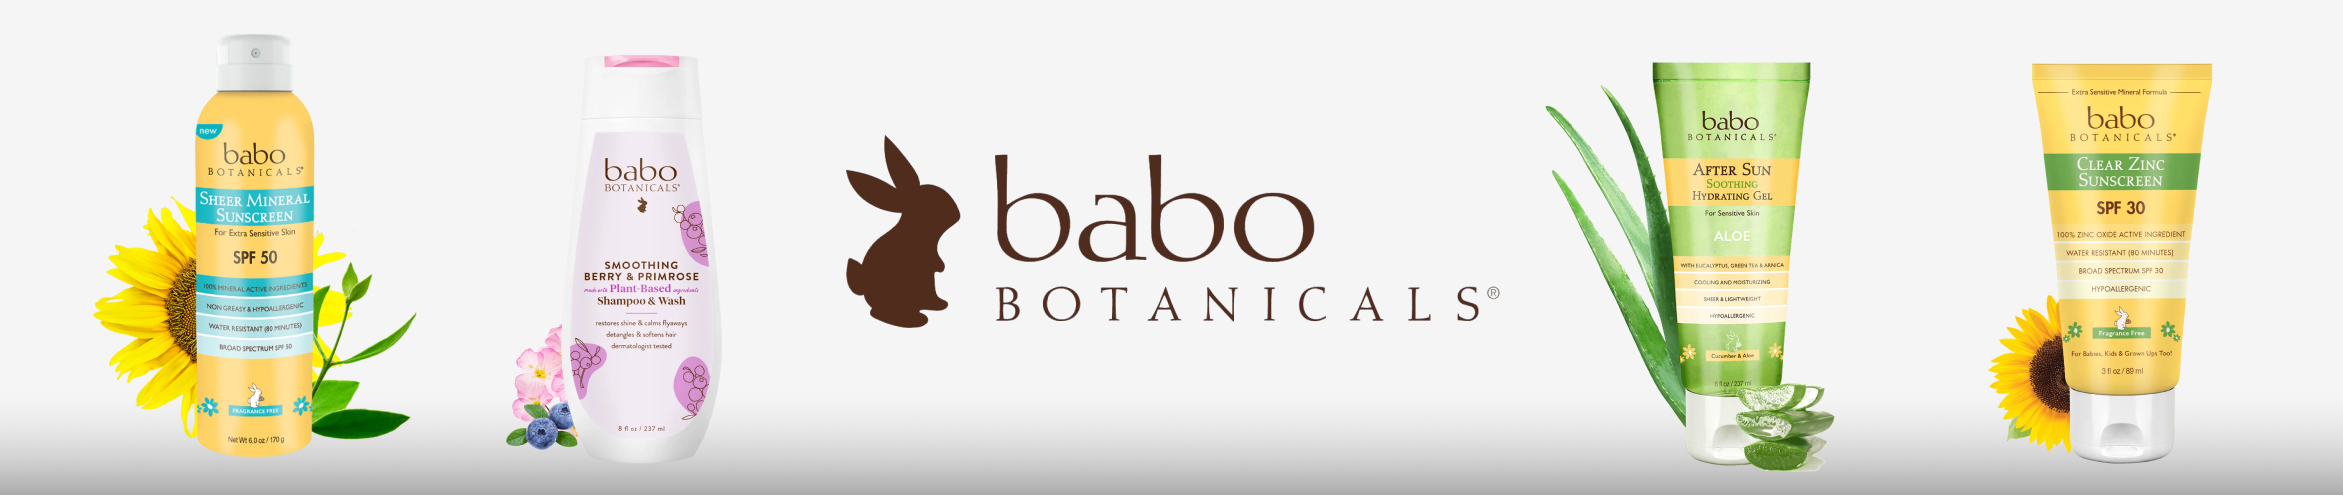 Babo Botanicals - Skin Care